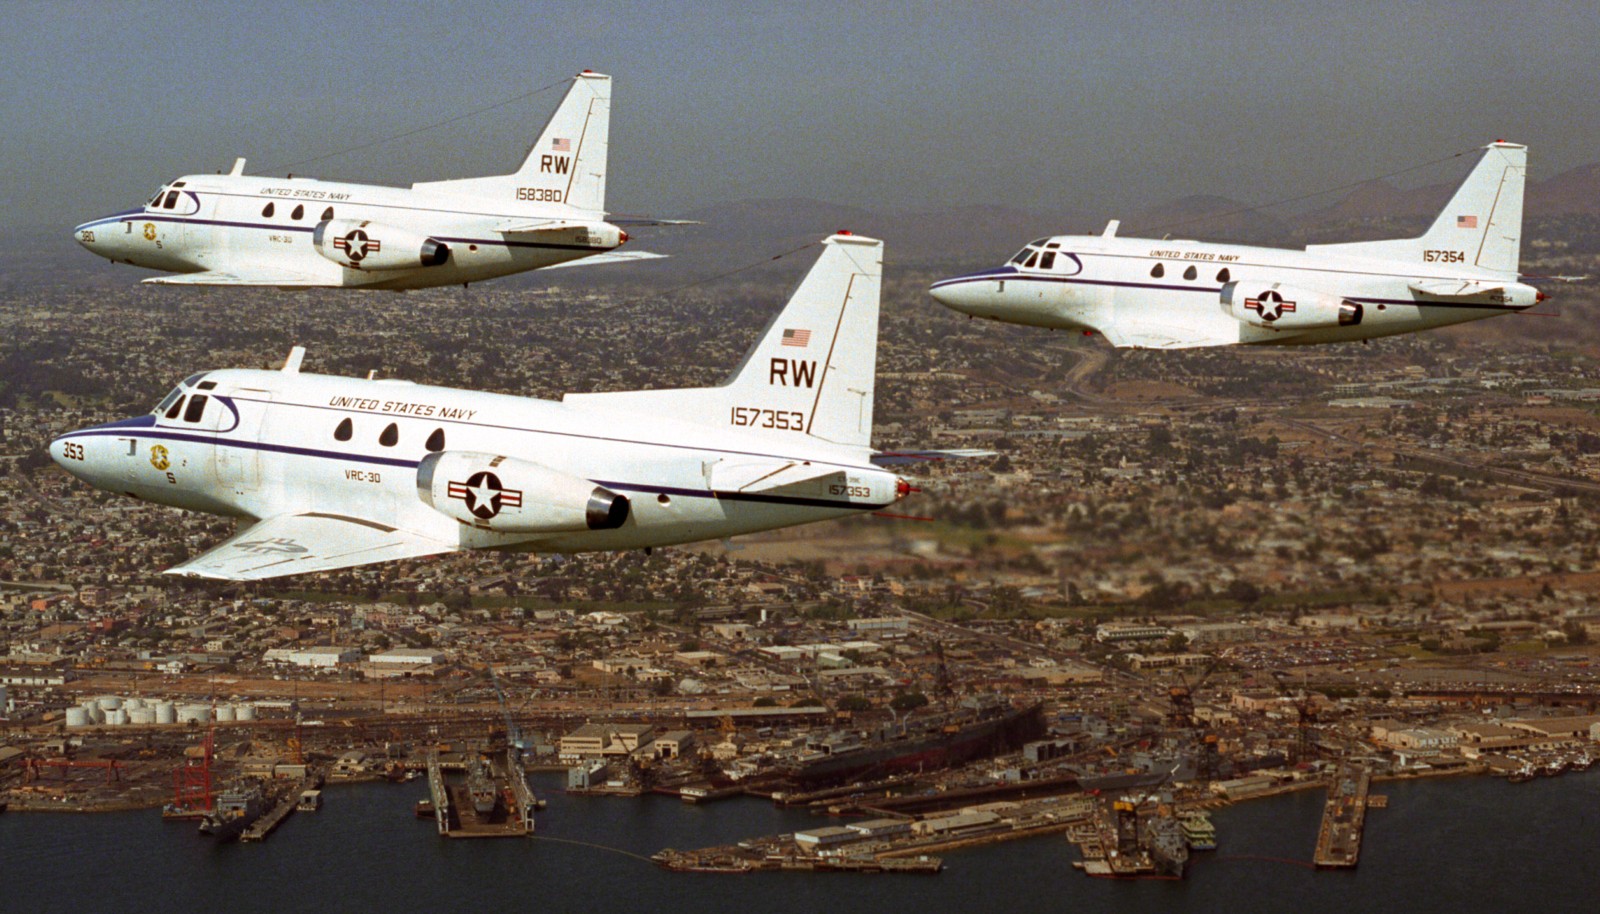 vrc-30 providers fleet logistics support squadron flelogsuppron north american ct-39e sabreliner nas north island california 246